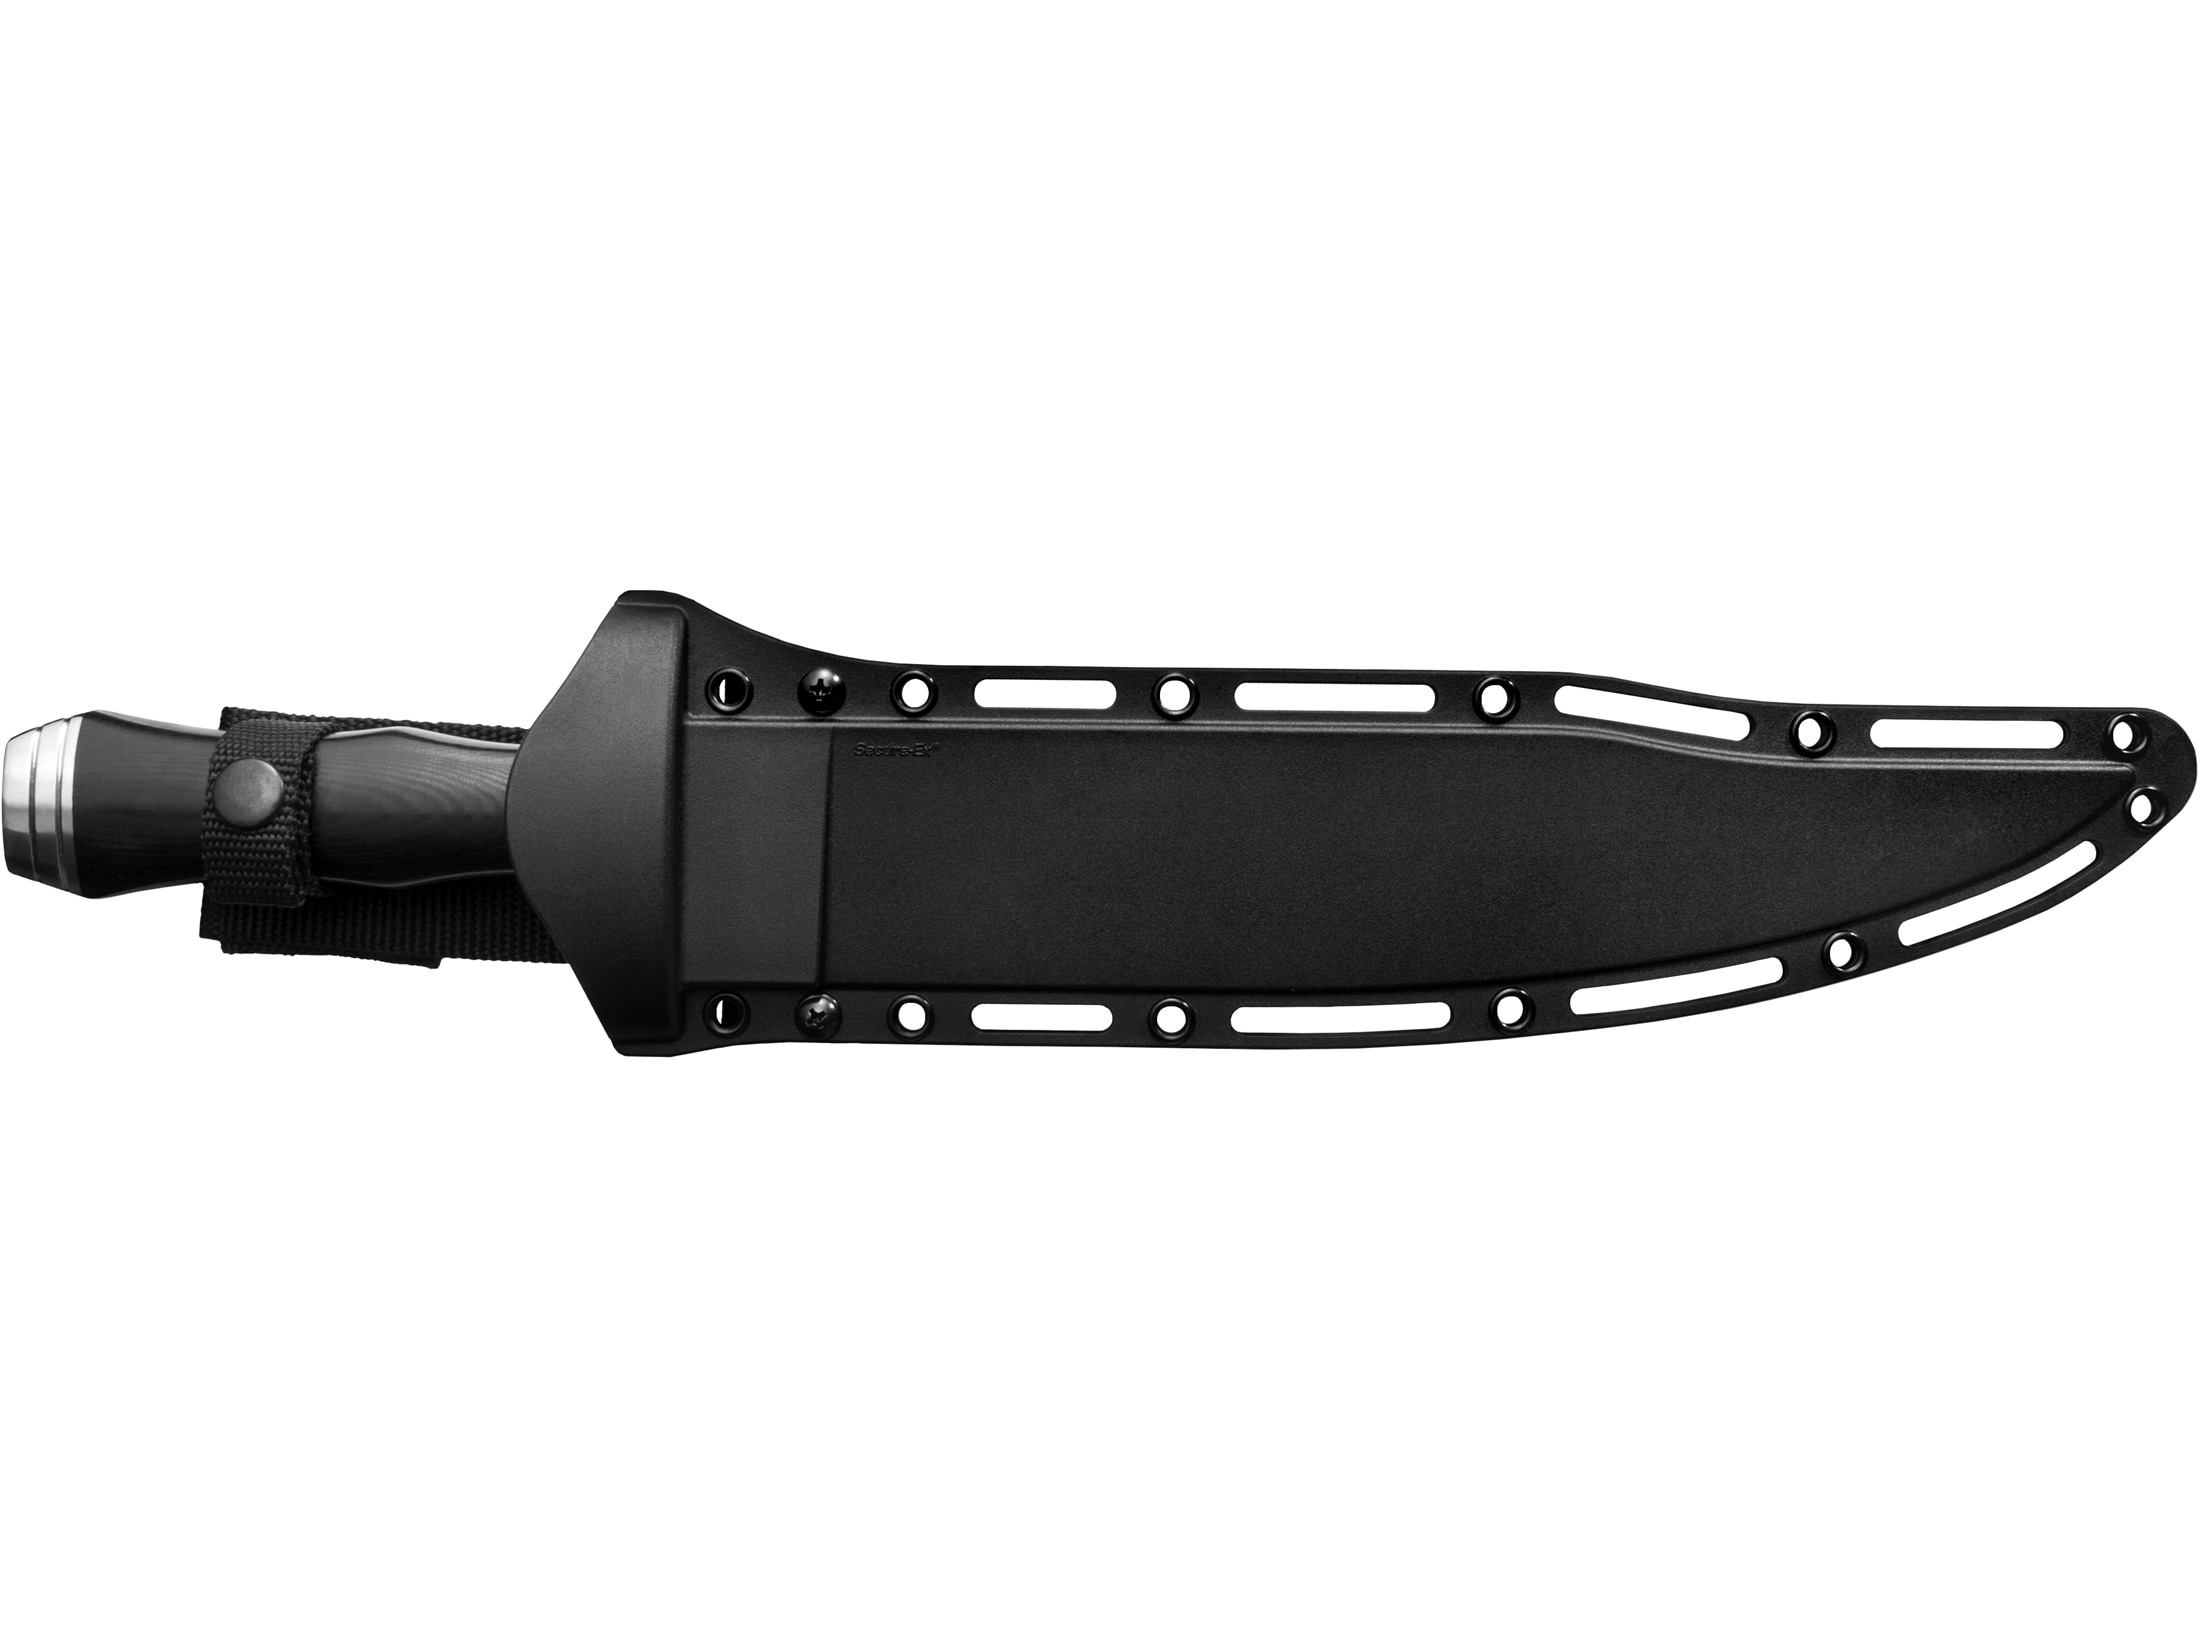 Cold Steel Natchez Bowie Fixed Blade Knife CPM-3V Polished Blade For Sale